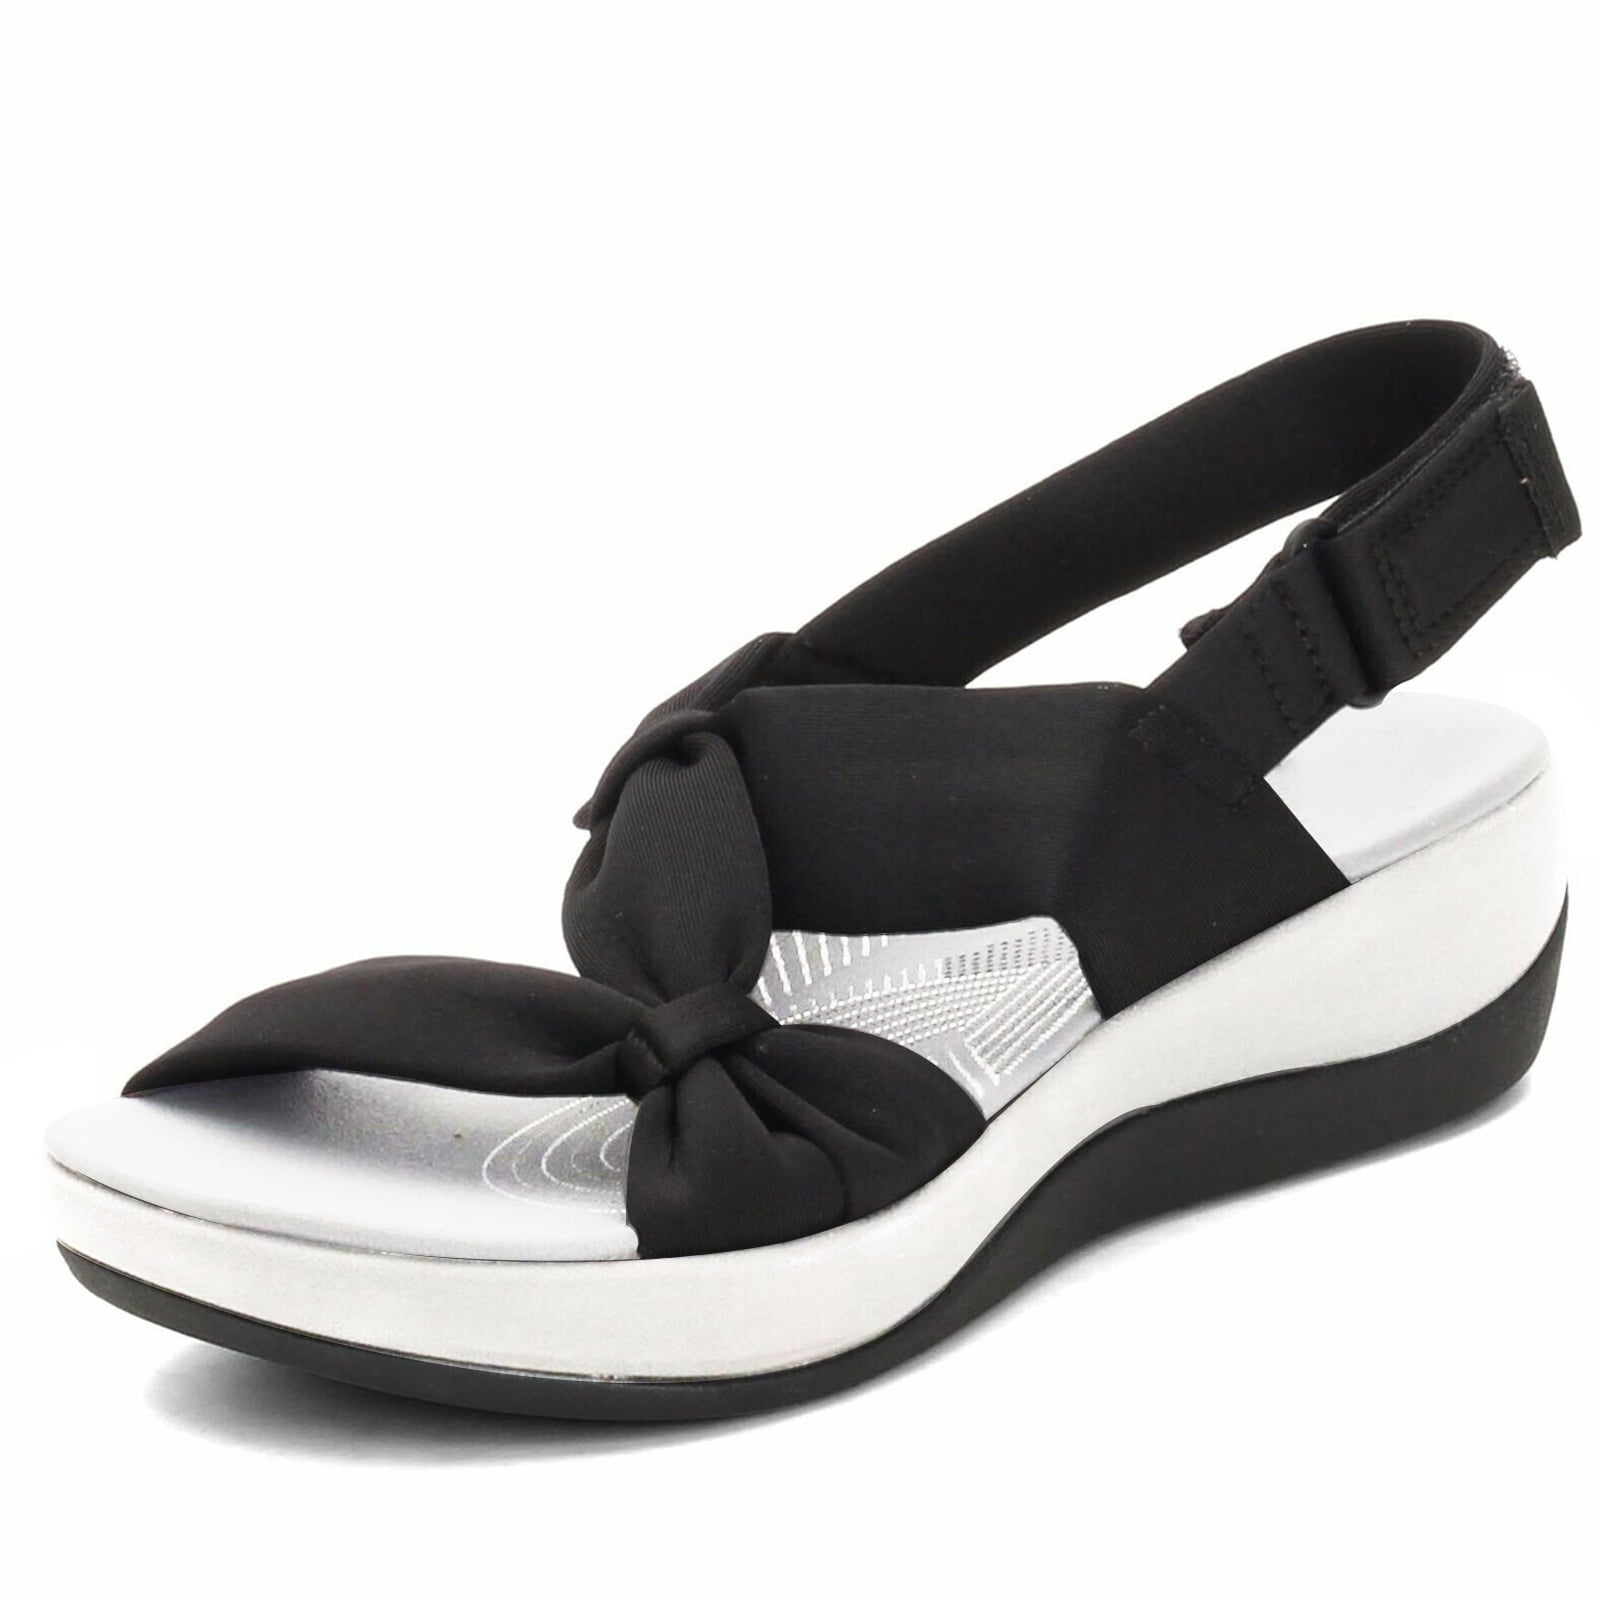 Floepx Fashion Light Star Super Stellar Women's Sandal Summer Beach Shoes  Buckle Design Thick Sole